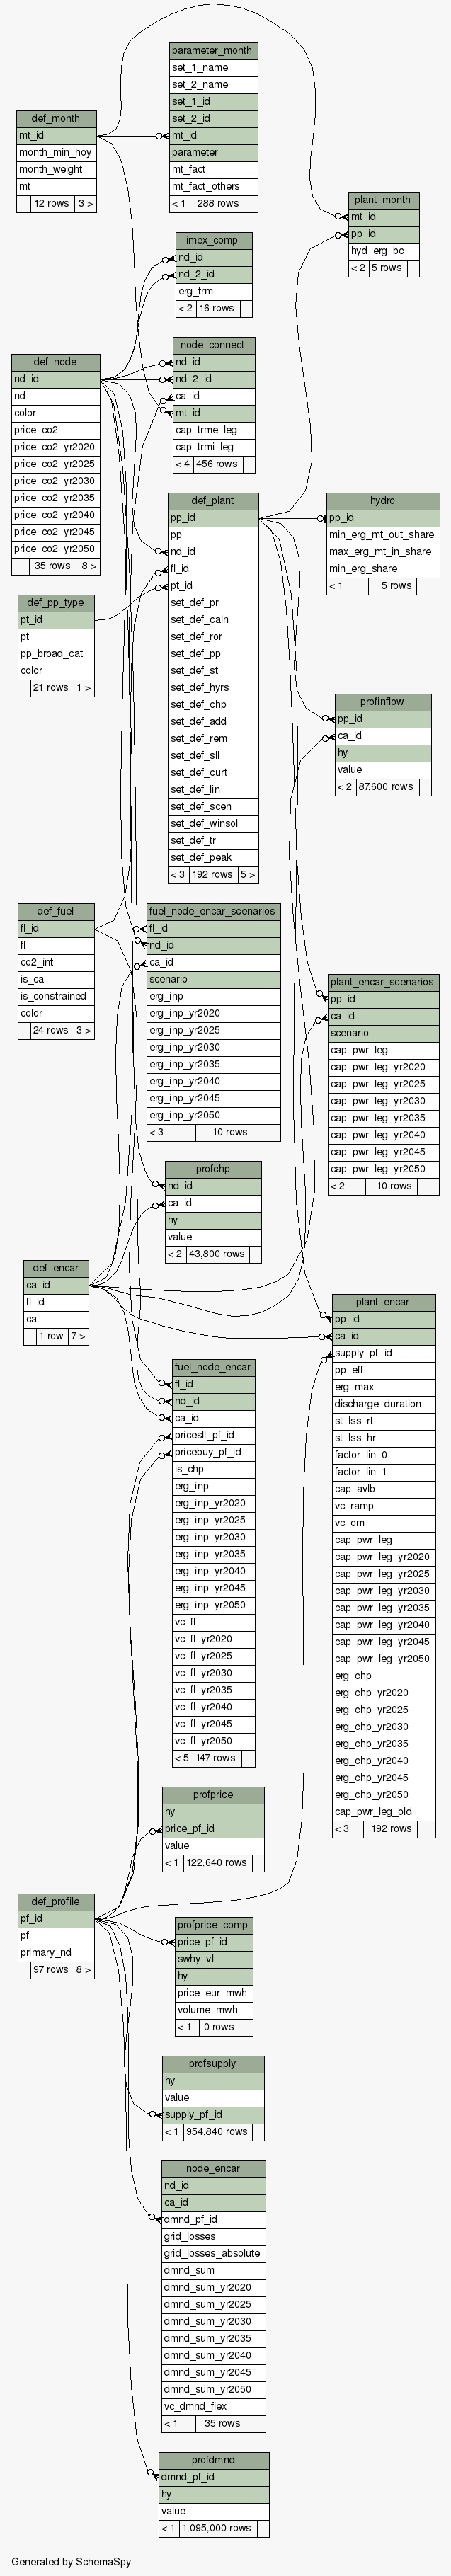 input schema table graph